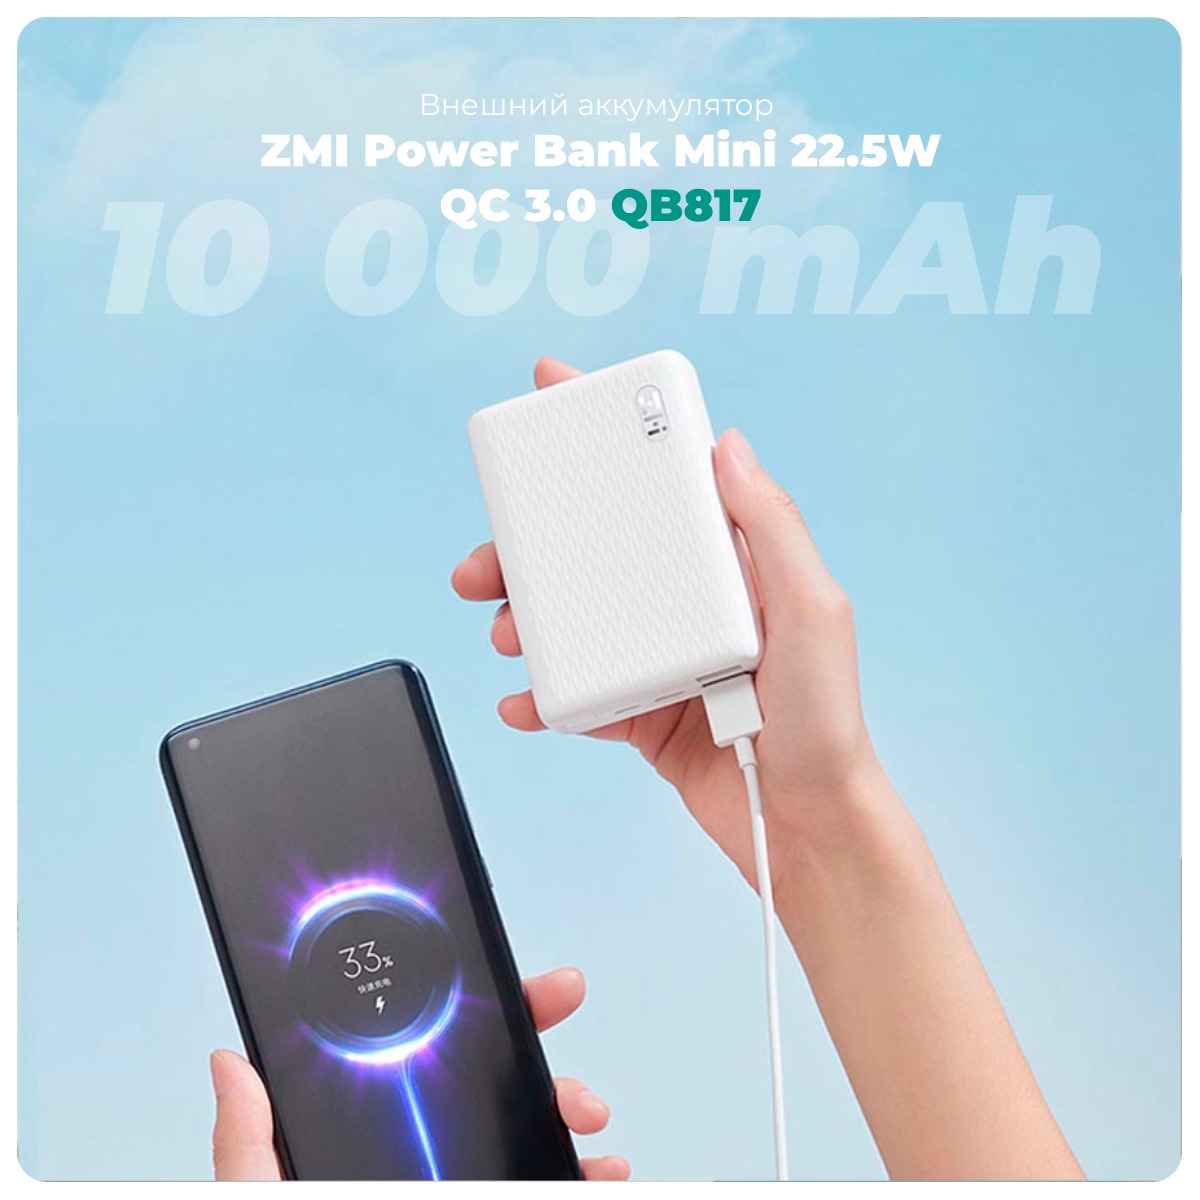 ZMI-Power-Bank-Mini-10-000-mAh-QB817-01